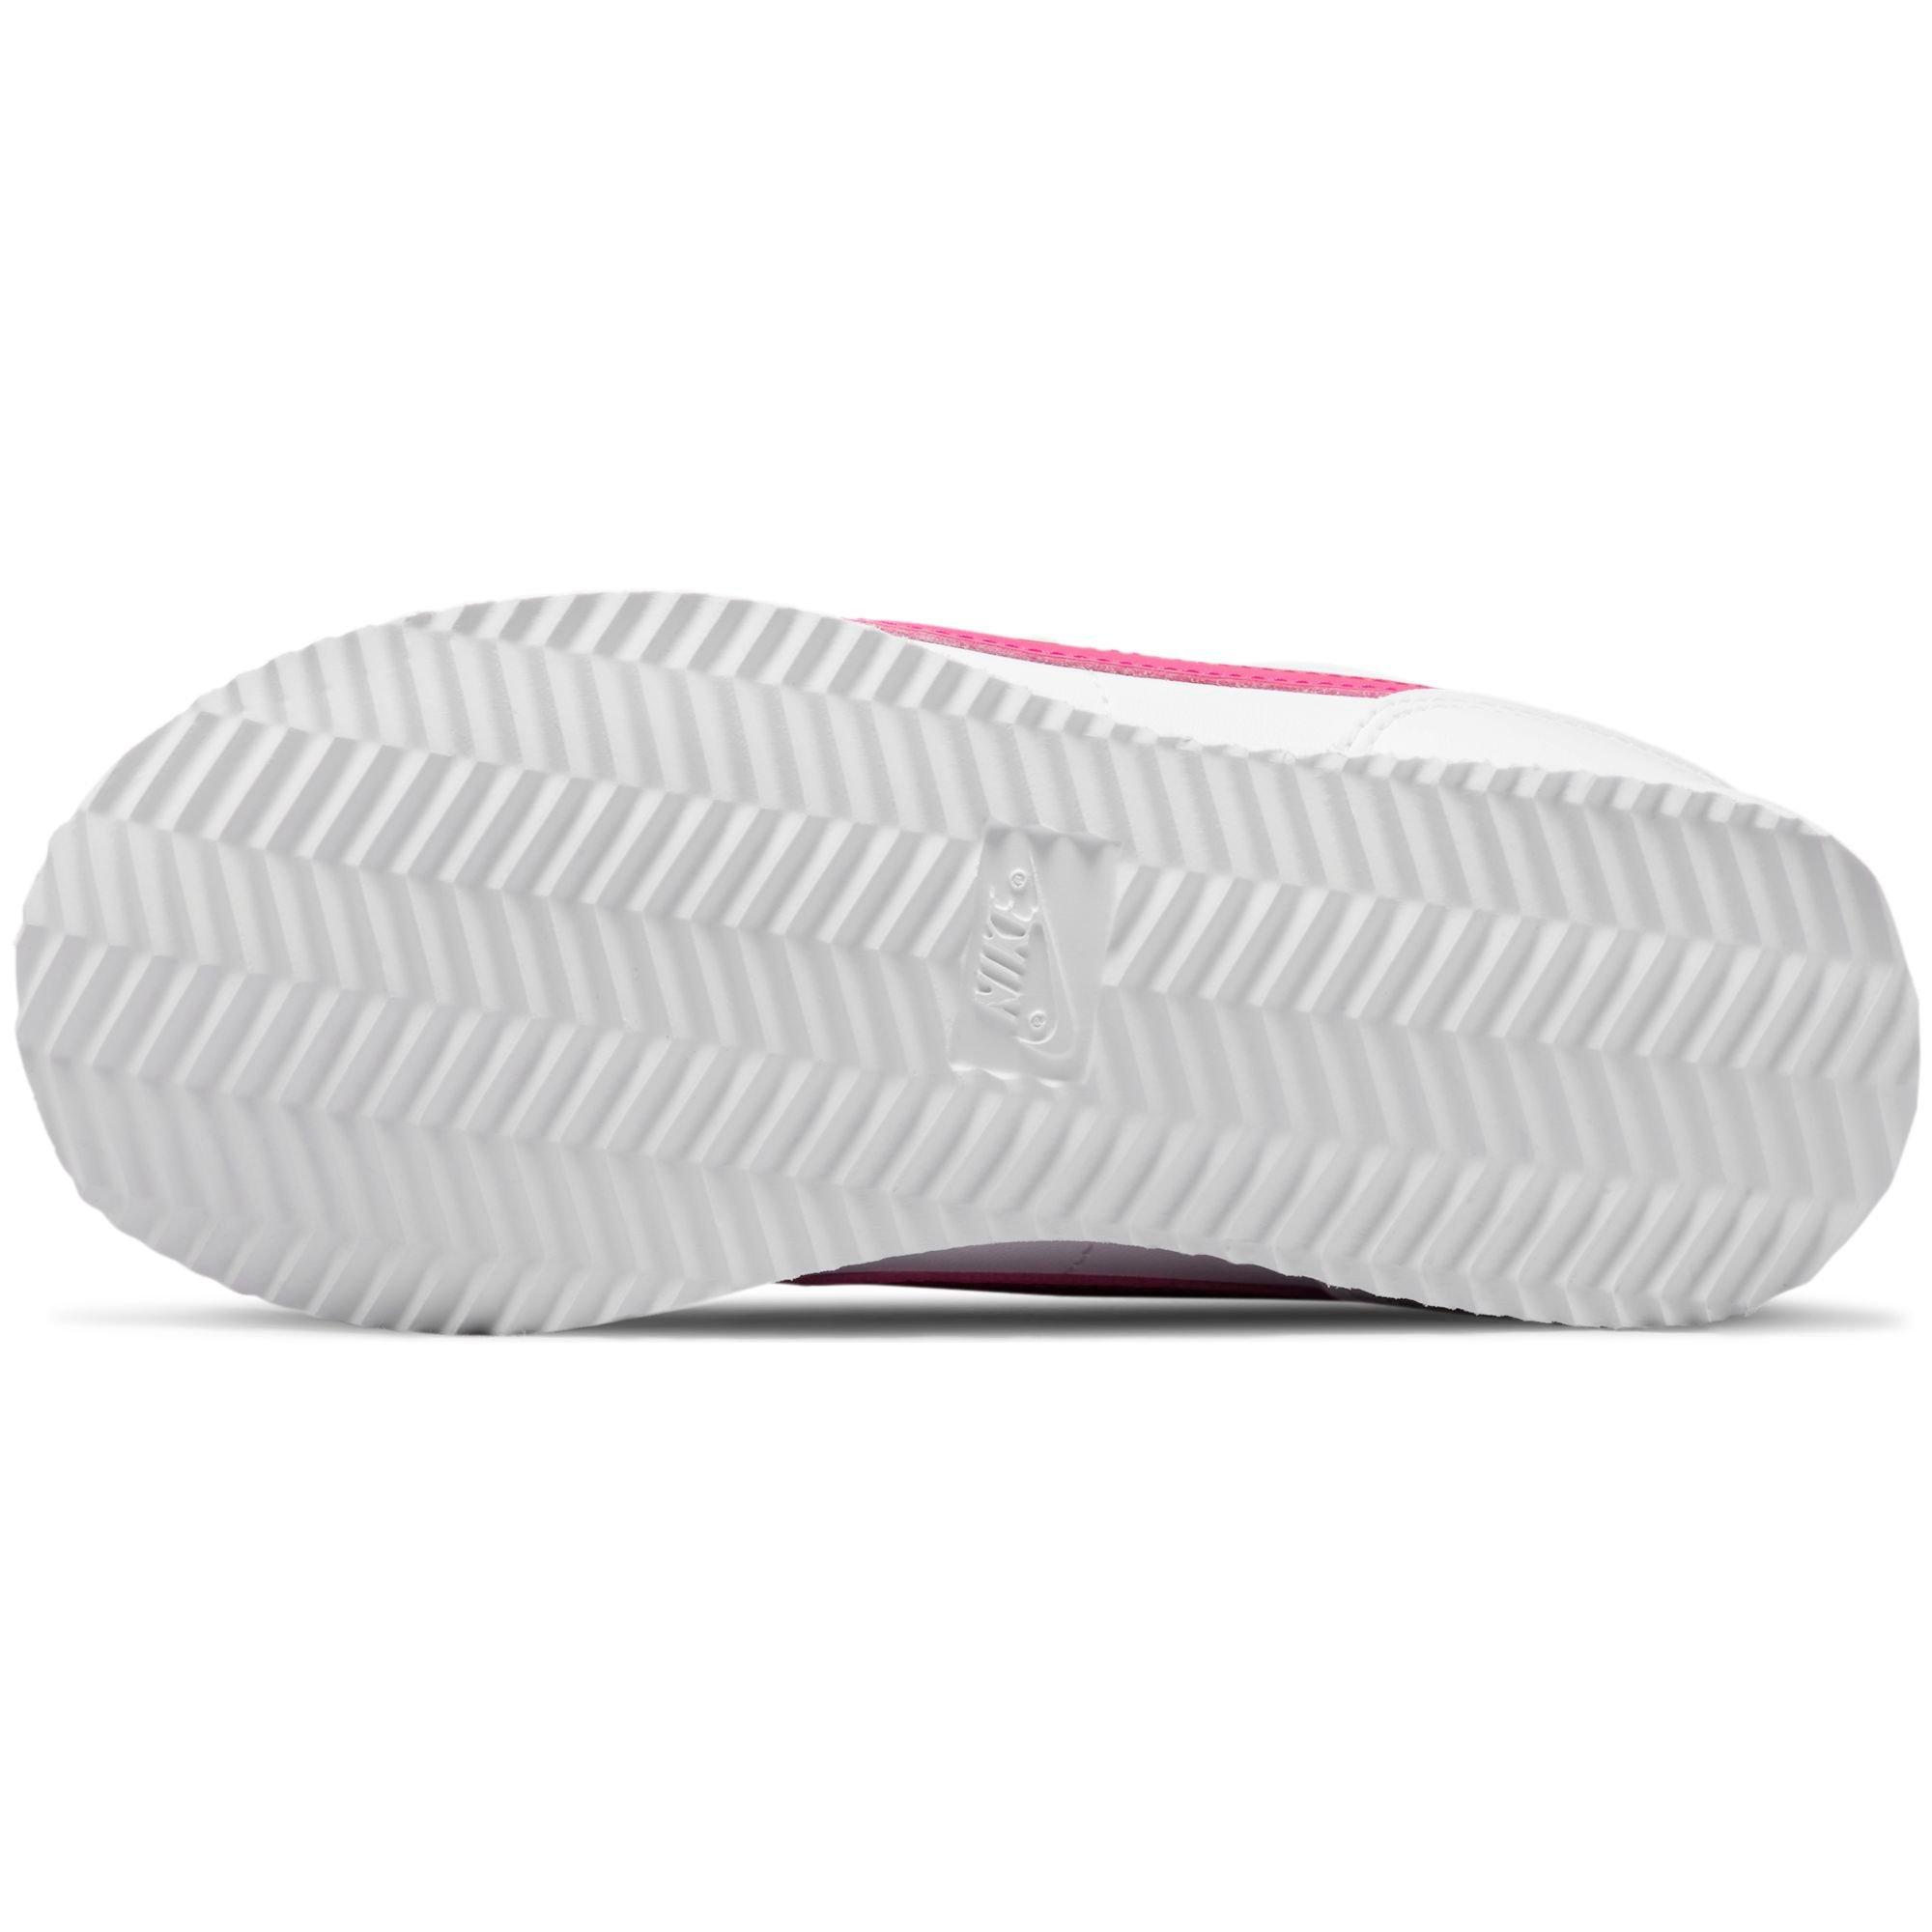 GS) Nike Cortez Basic TXT SE 'Storm Pink' AA3498-600 - KICKS CREW